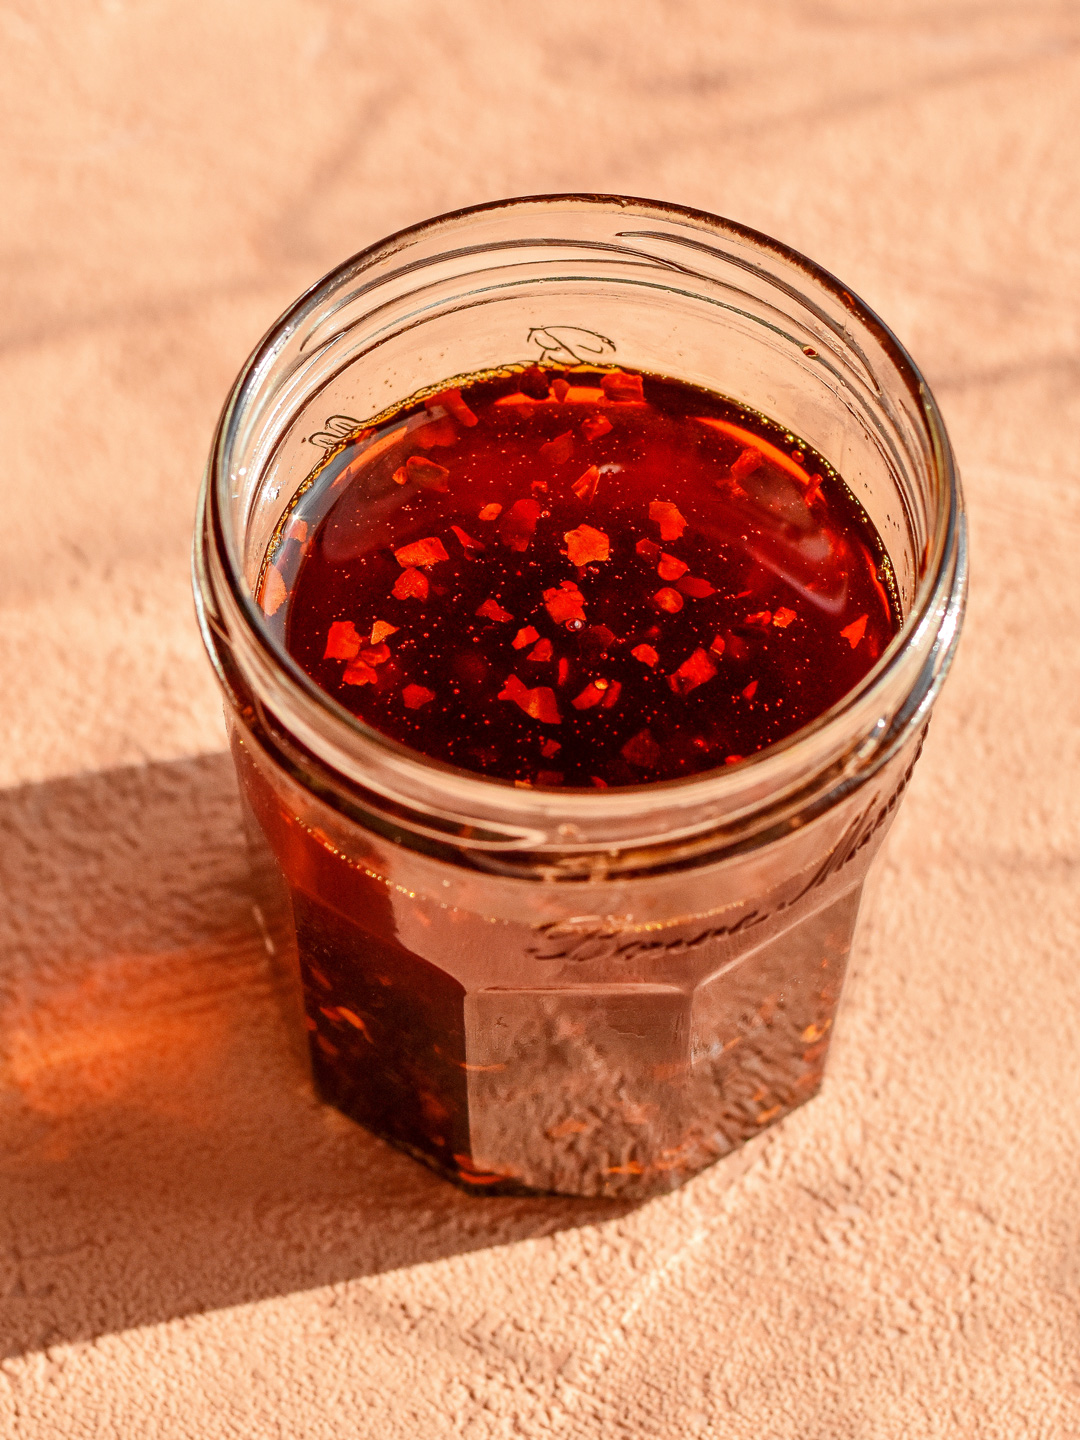 garlic chilli oil served in a glass jar